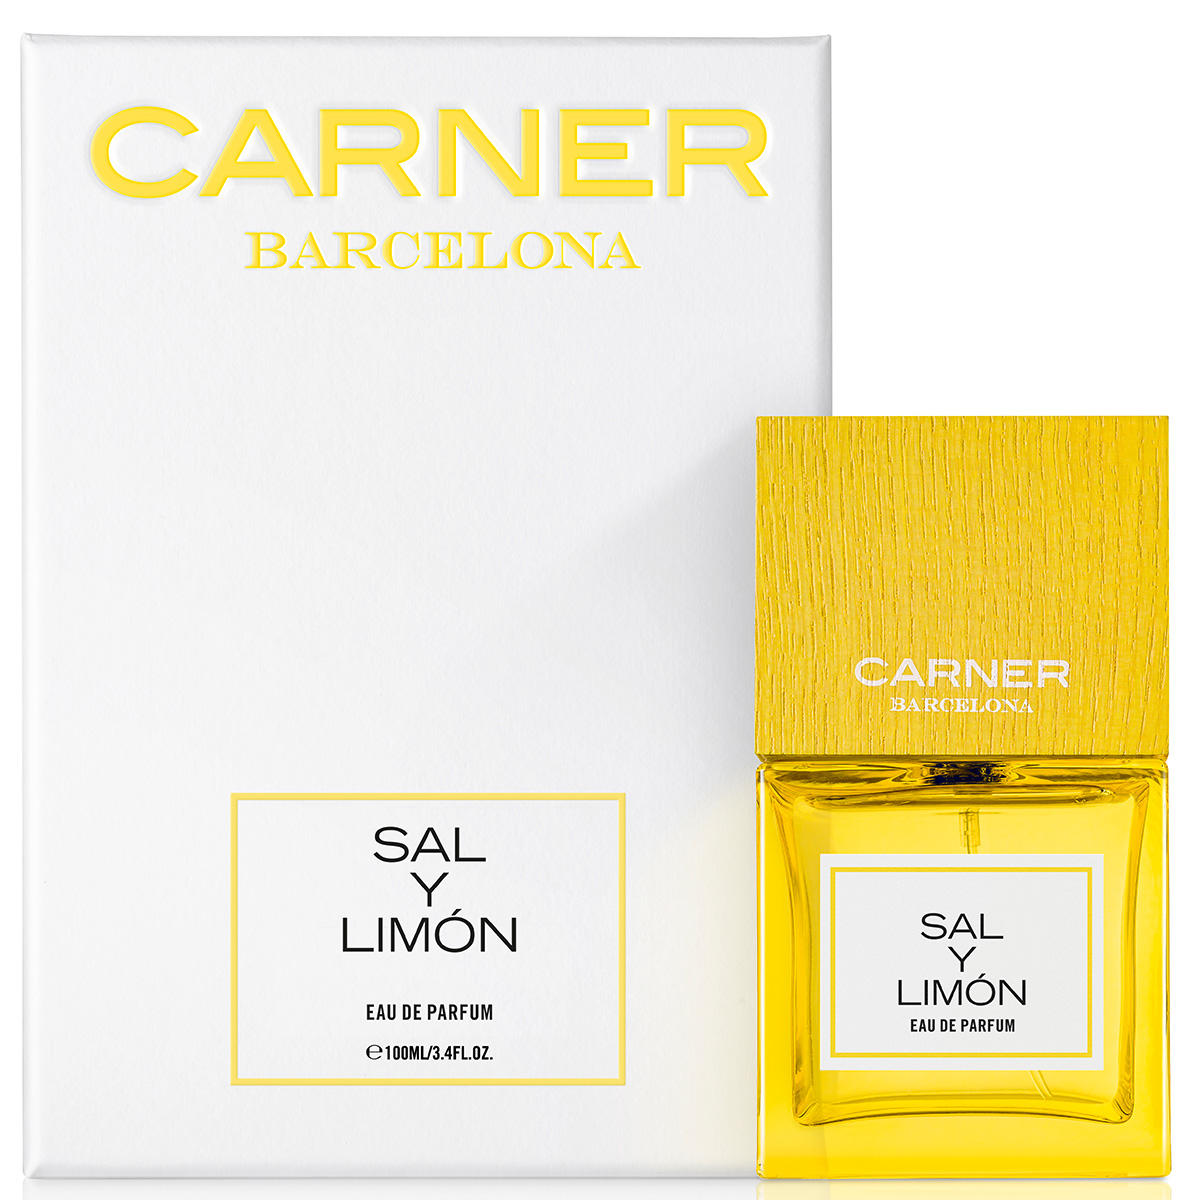 CARNER BARCELONA SAL Y LIMÓN Eau de Parfum 100 ml - 2